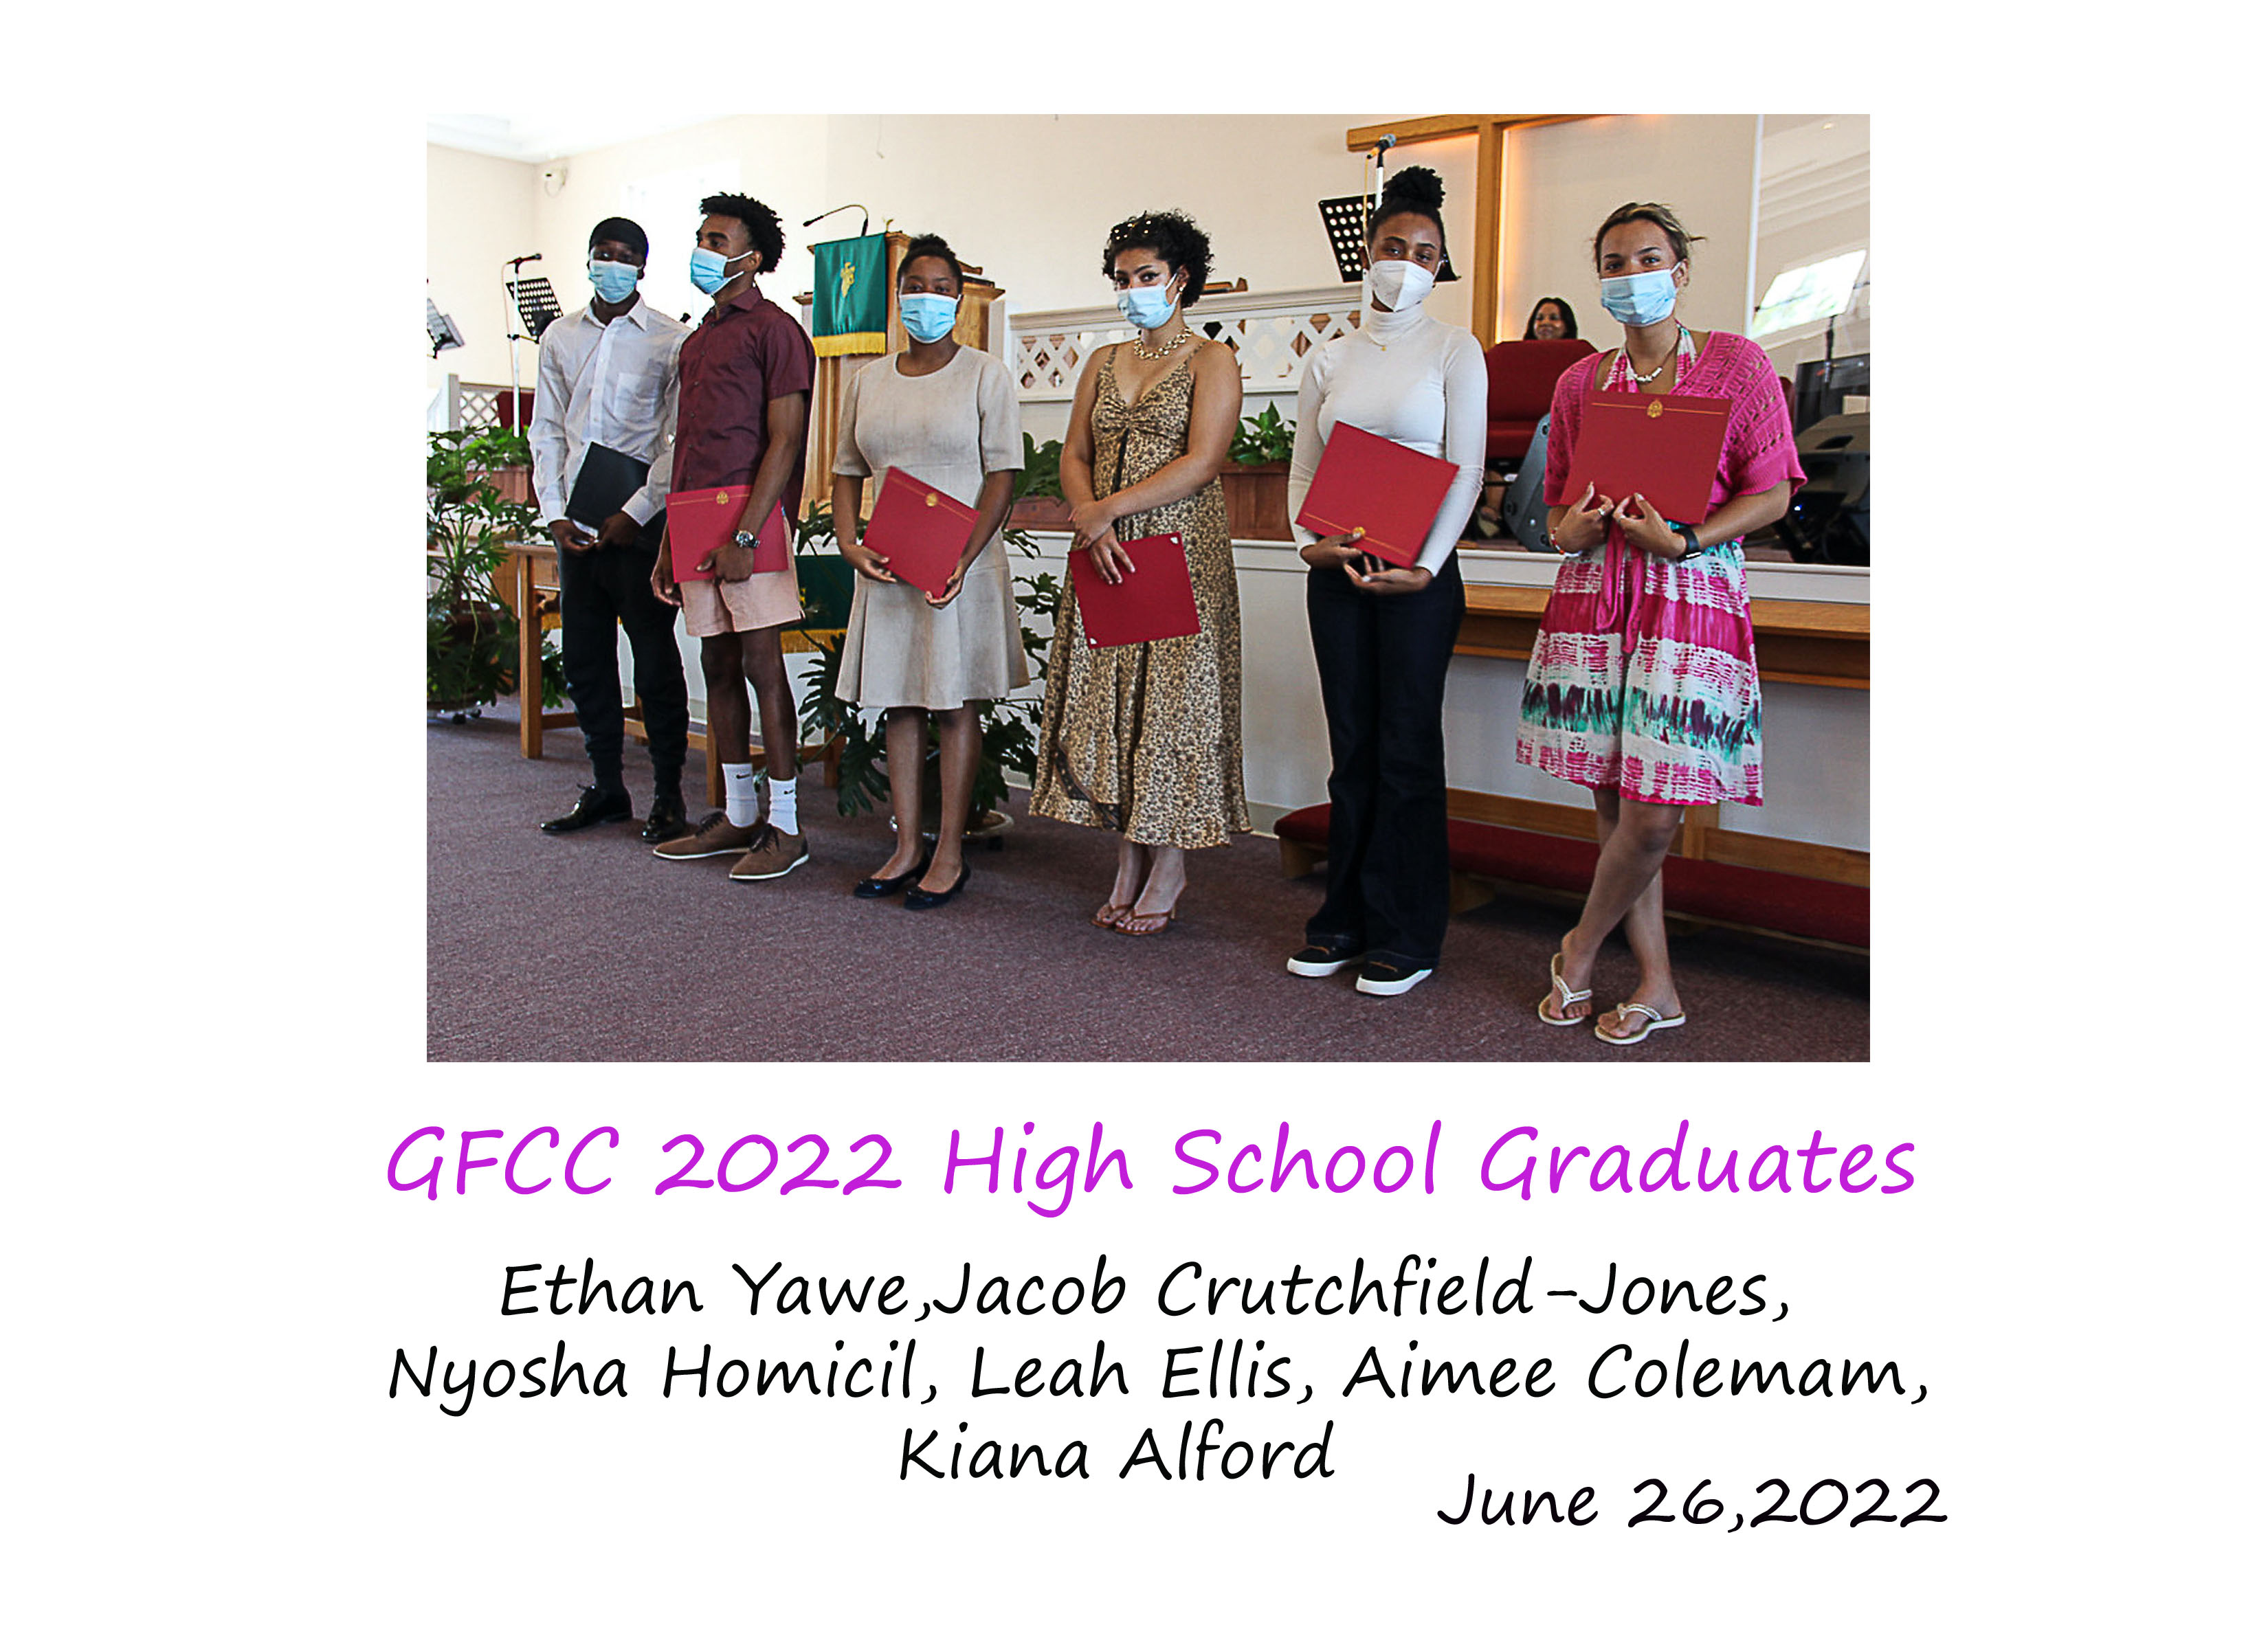 GFCC's high school graduates